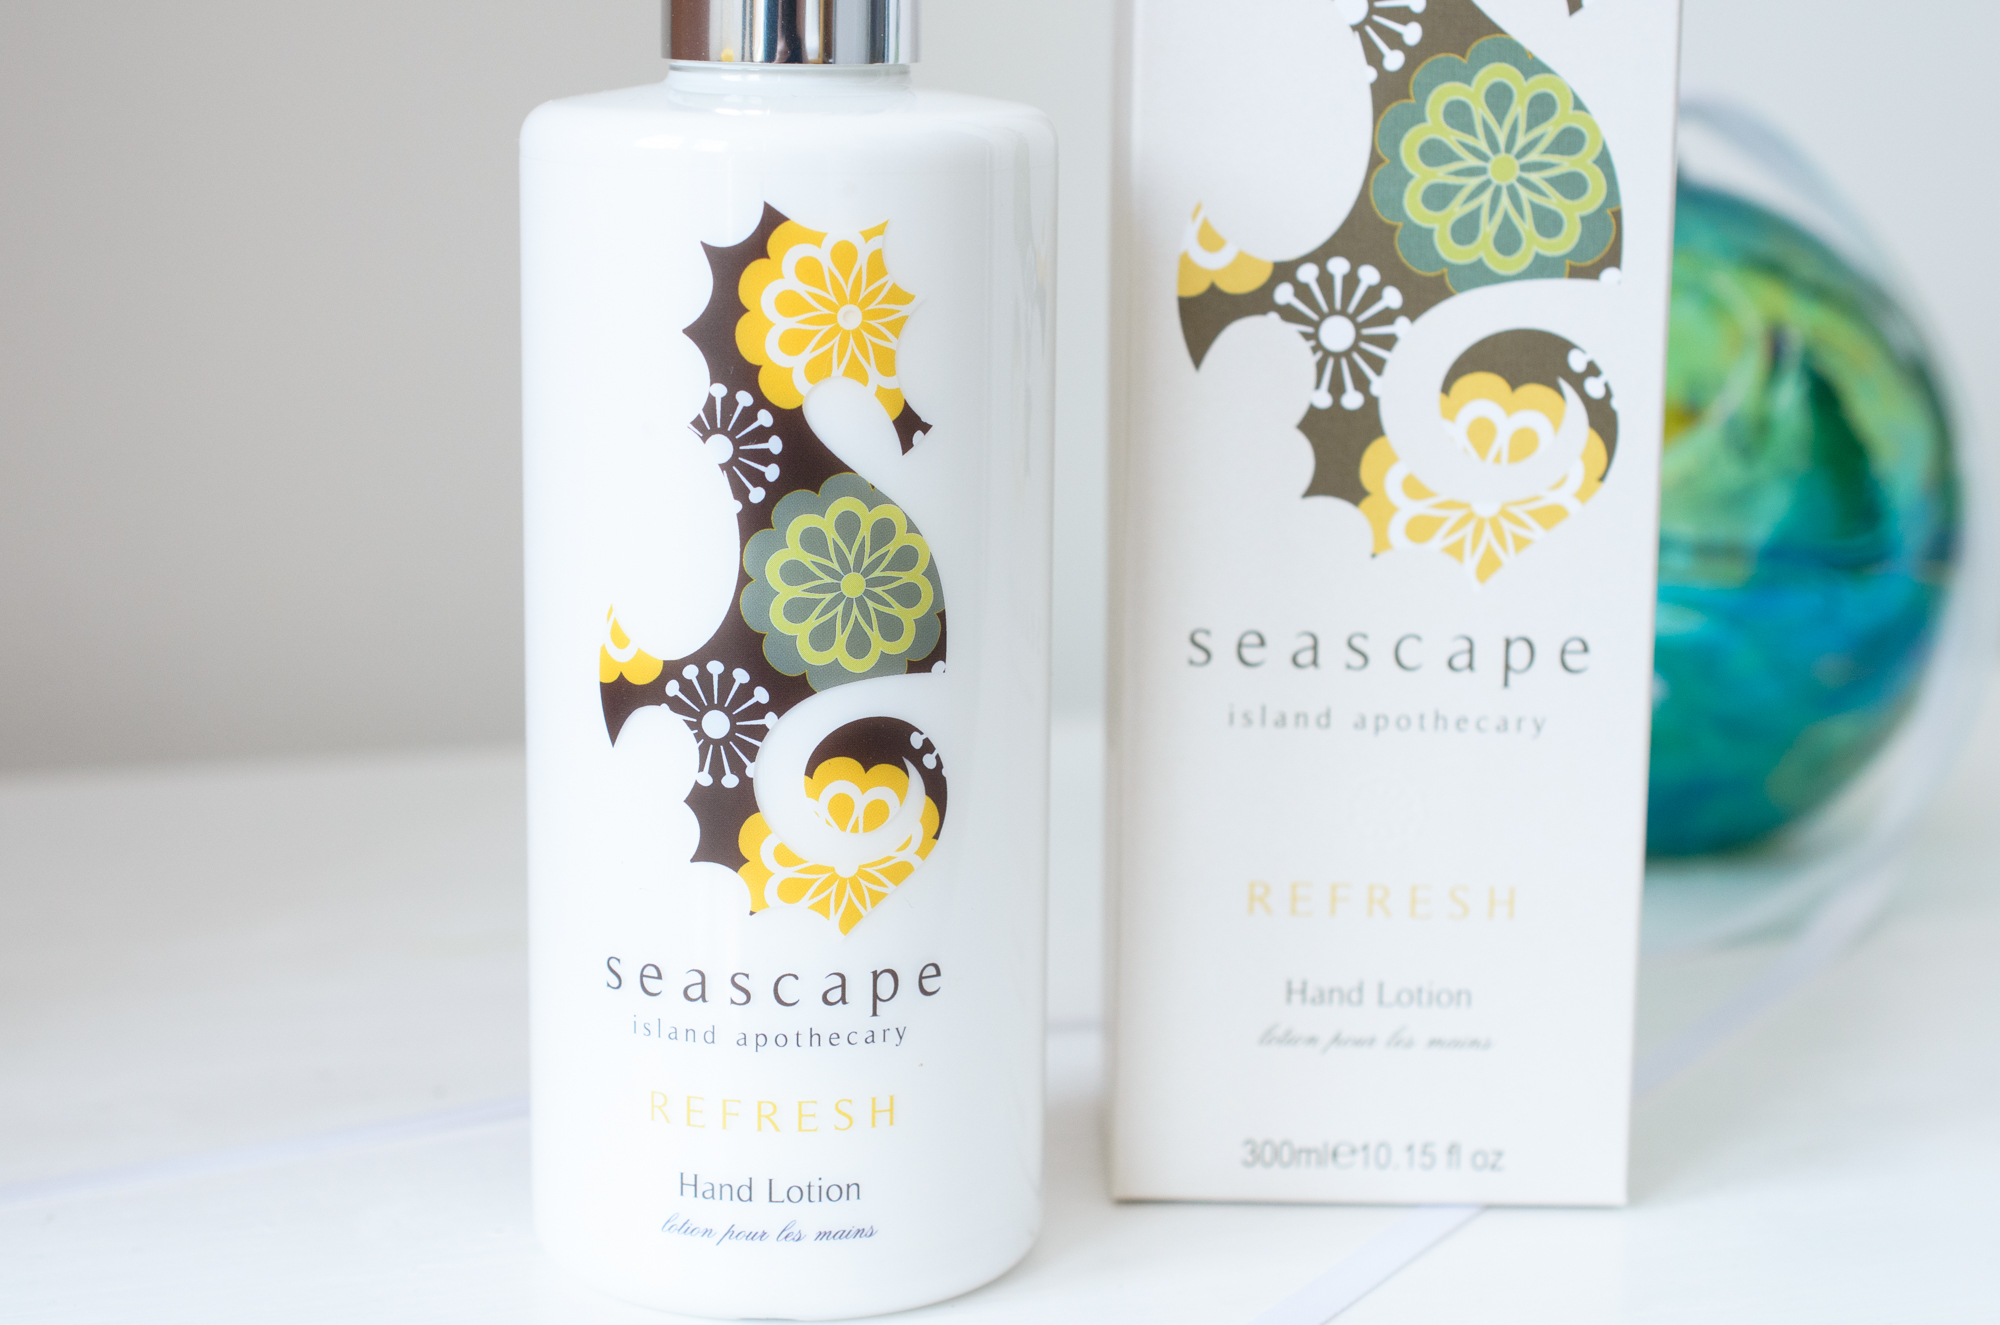 Seascape Island Apothecary Refresh Hand Cream